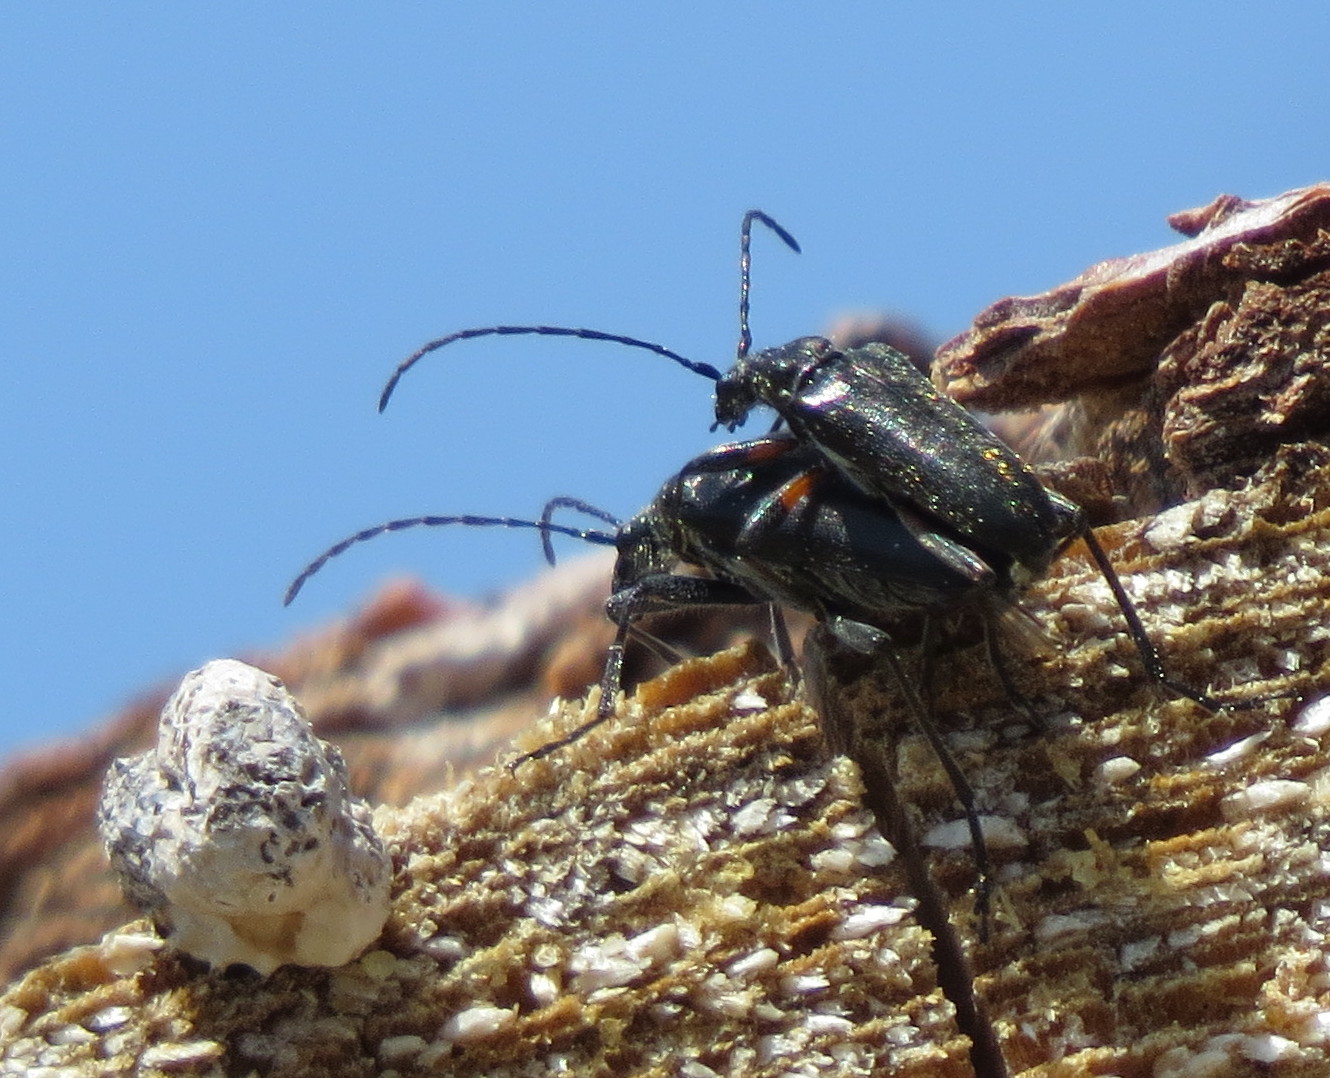 Single horned beetle